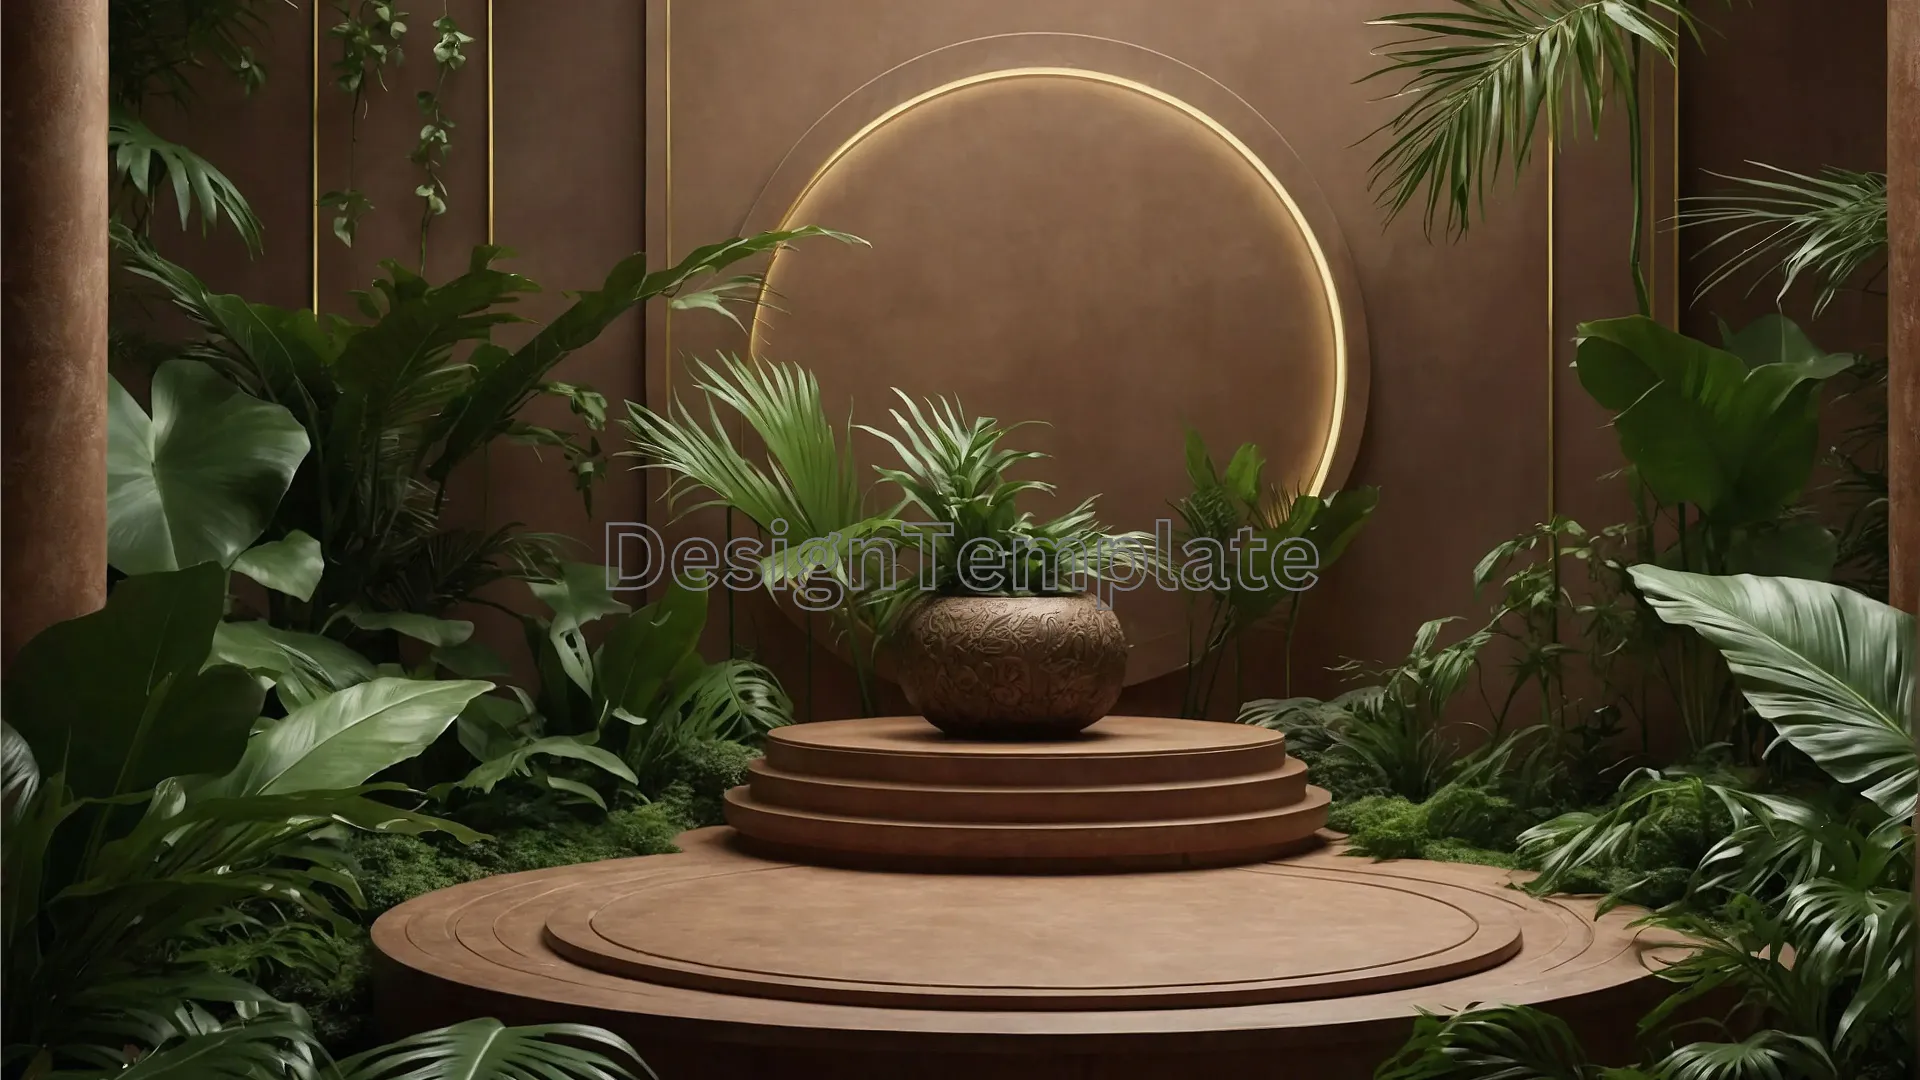 Lush Jungle Podium Texture Image image